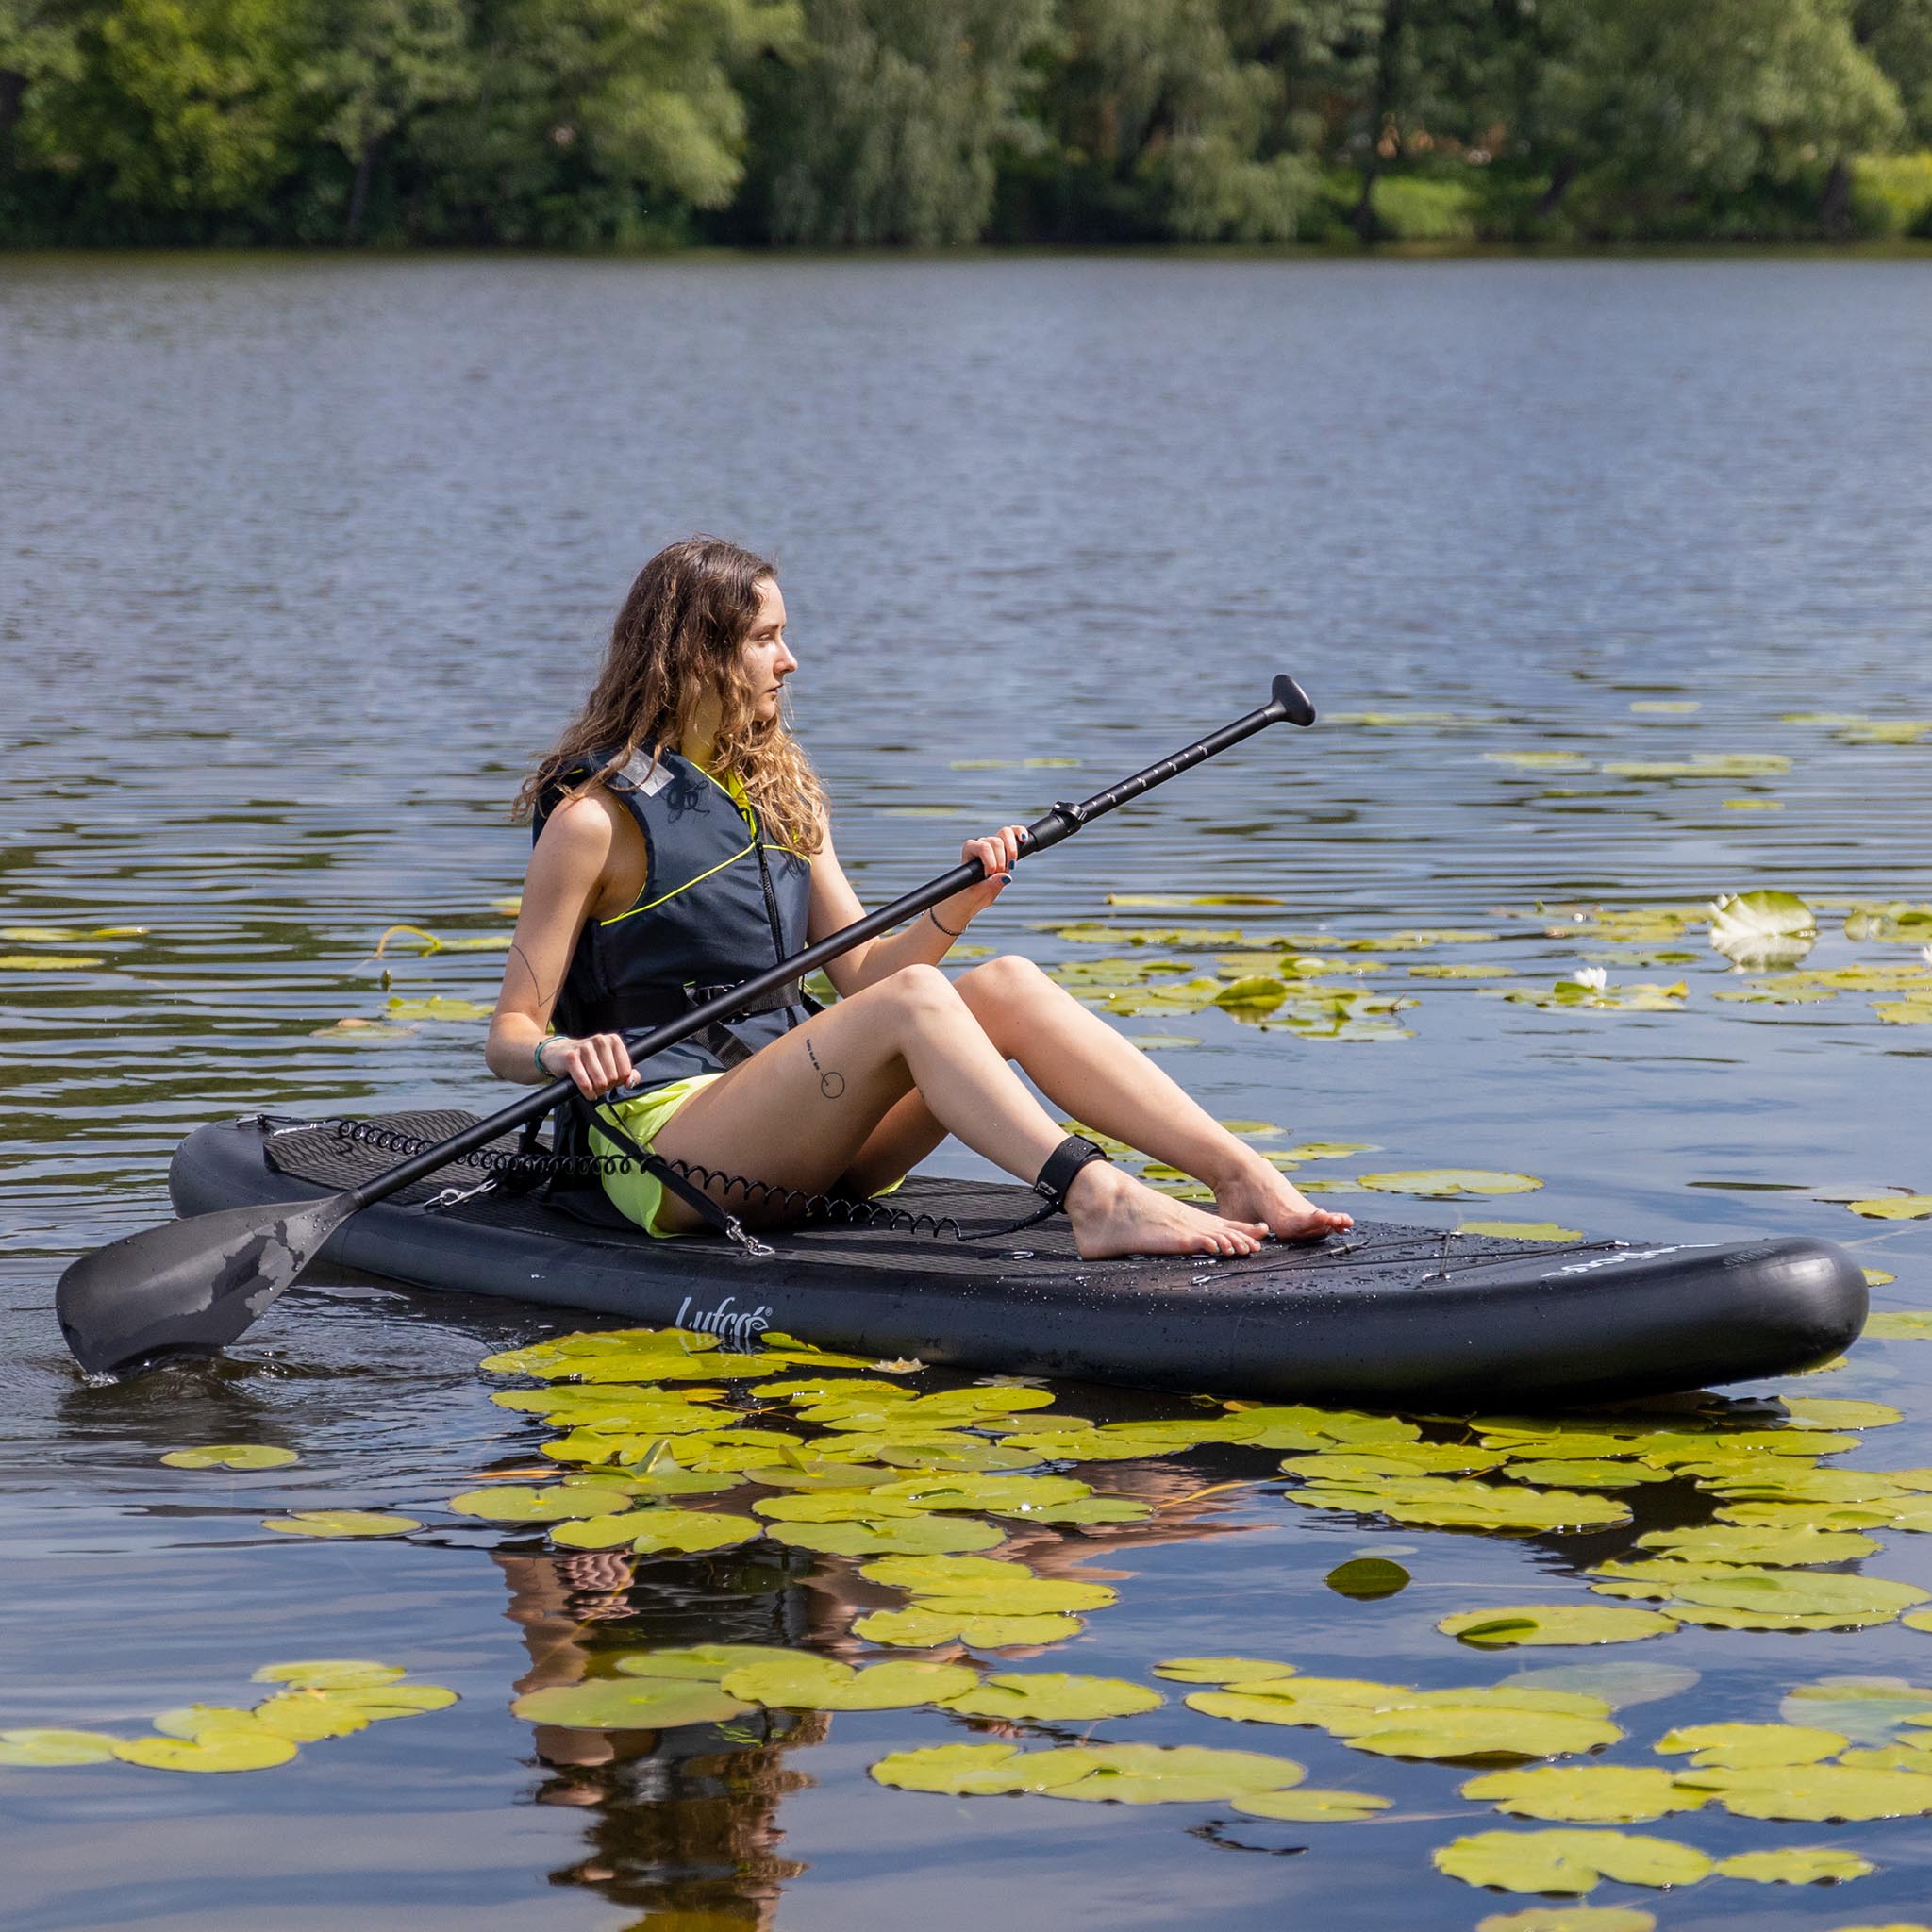 SUP-bräda 3m med sits | Uppblåsbar paddle board | 15psi | Lyfco